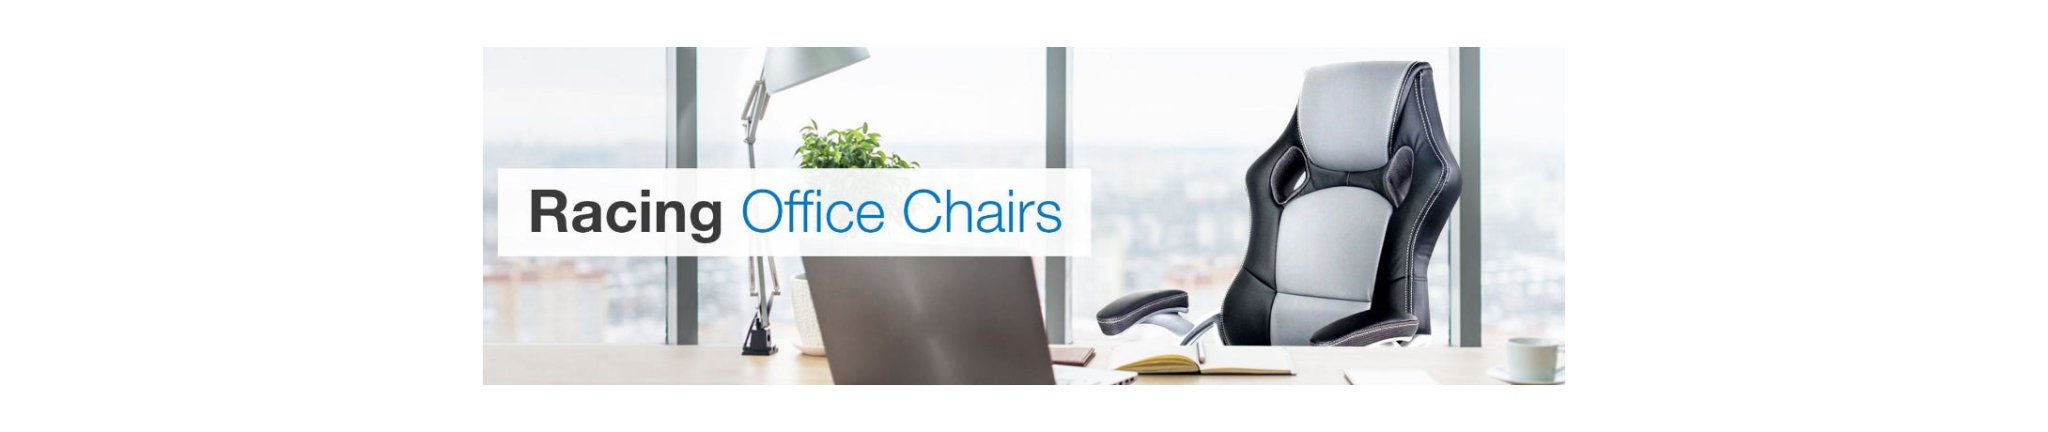 Office Chairs Furniture - Newstart Furniture